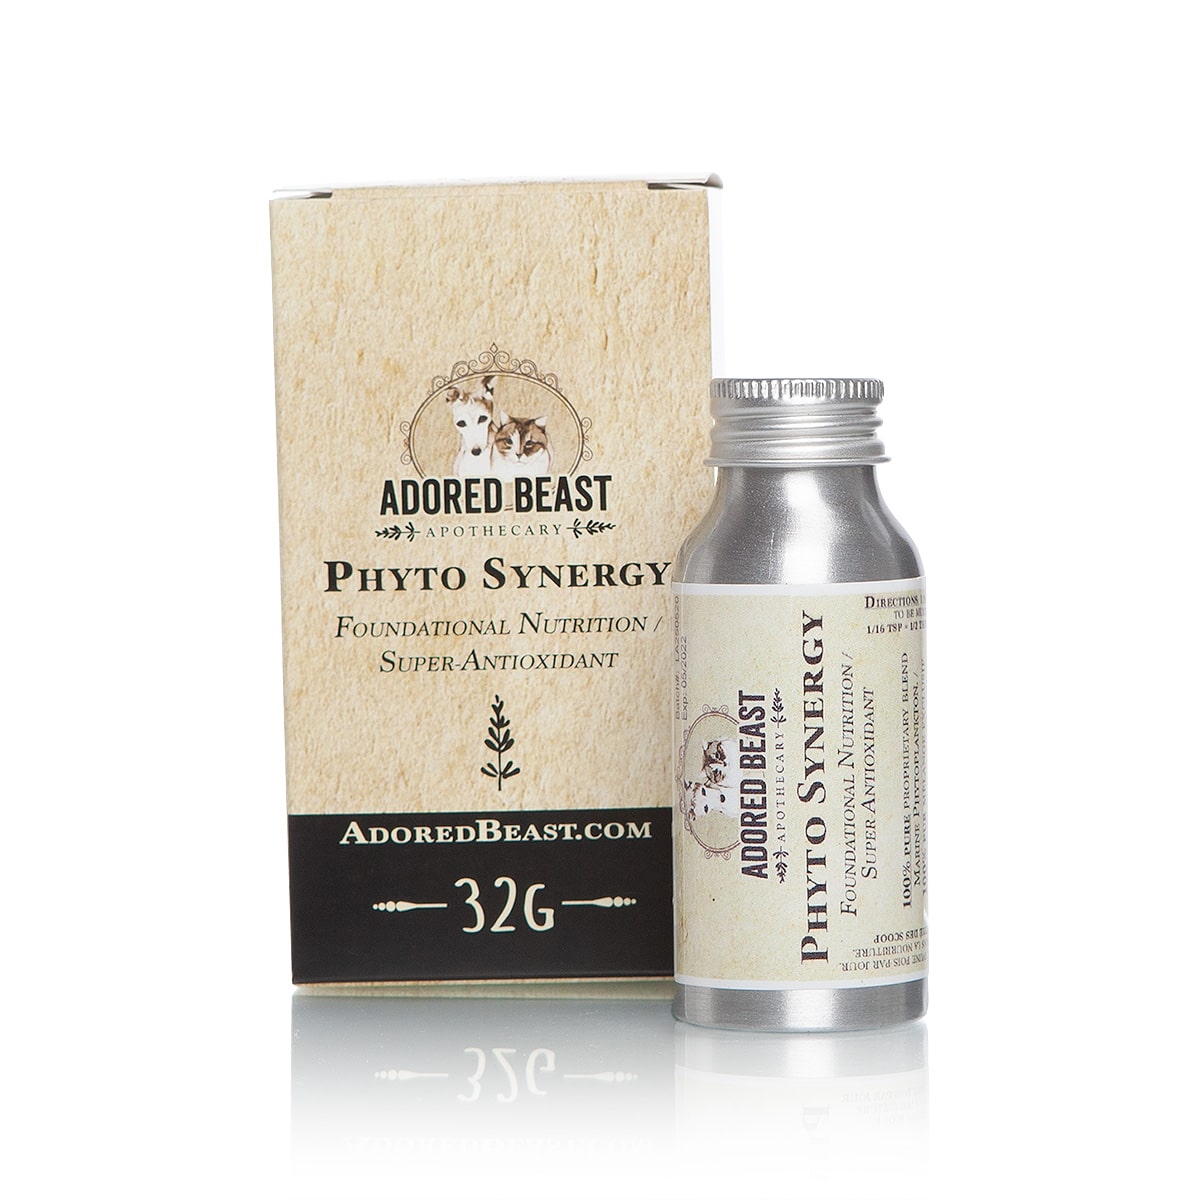 Adored Beast Phyto Synergy 15g